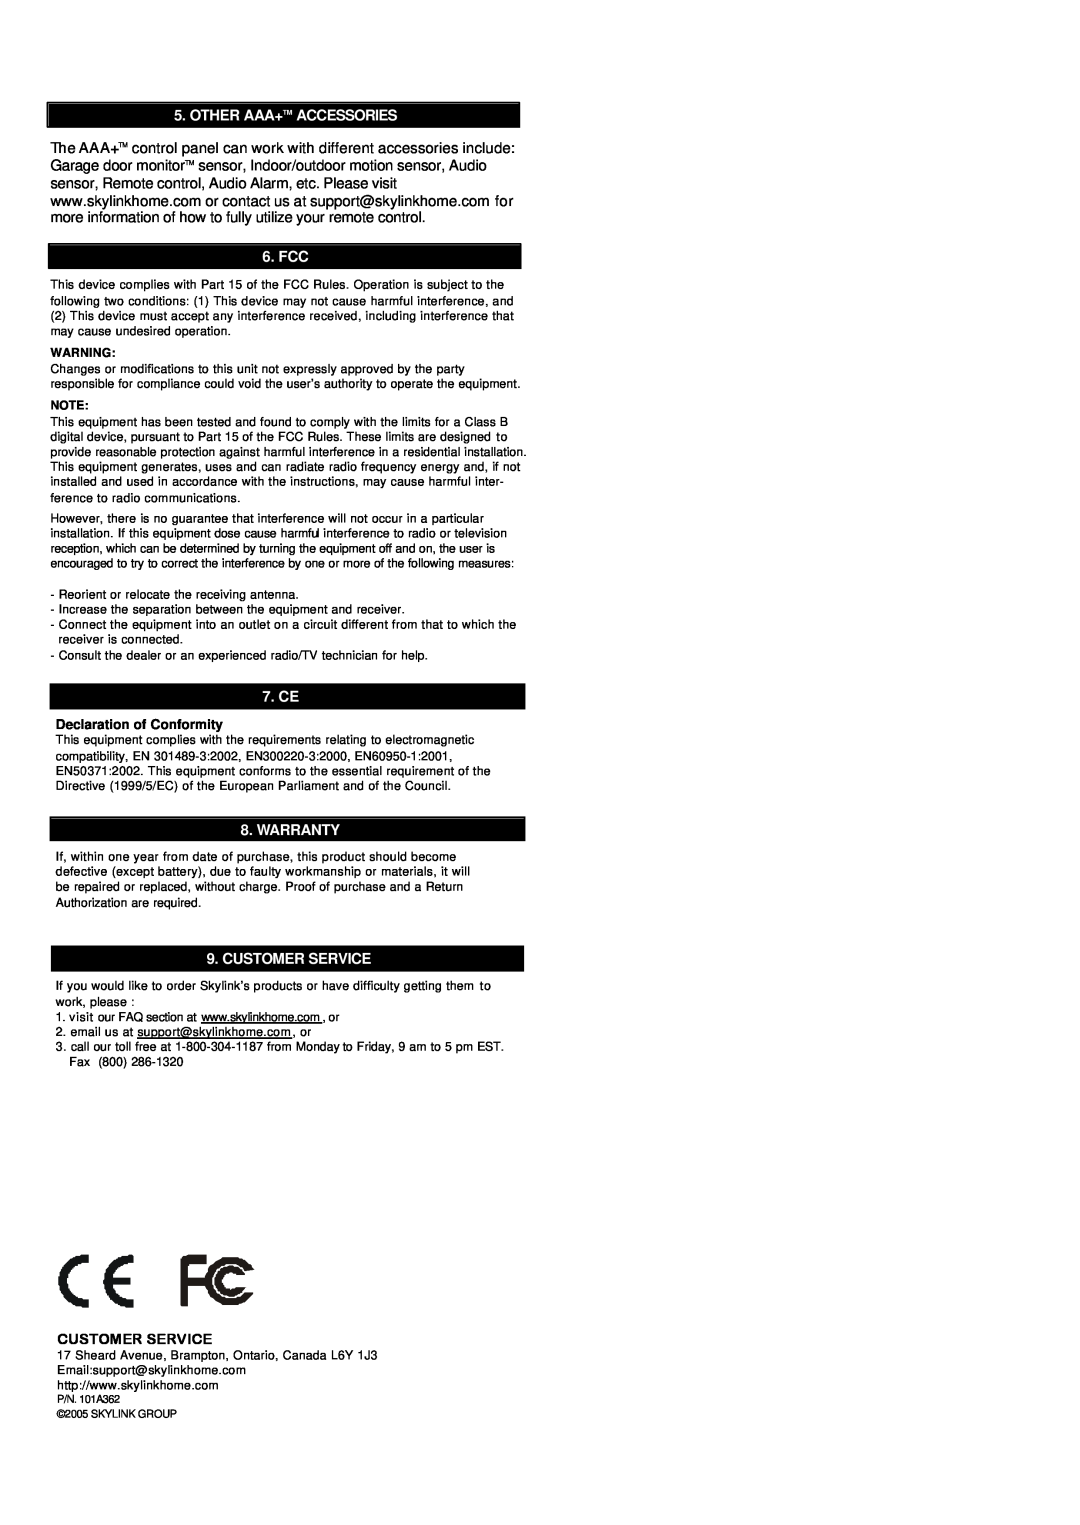 SkyLink 4B-101 manual Other Aaa+Tm Accessories, Fcc, 7. CE, Warranty, Customer Service, Declaration of Conformity 